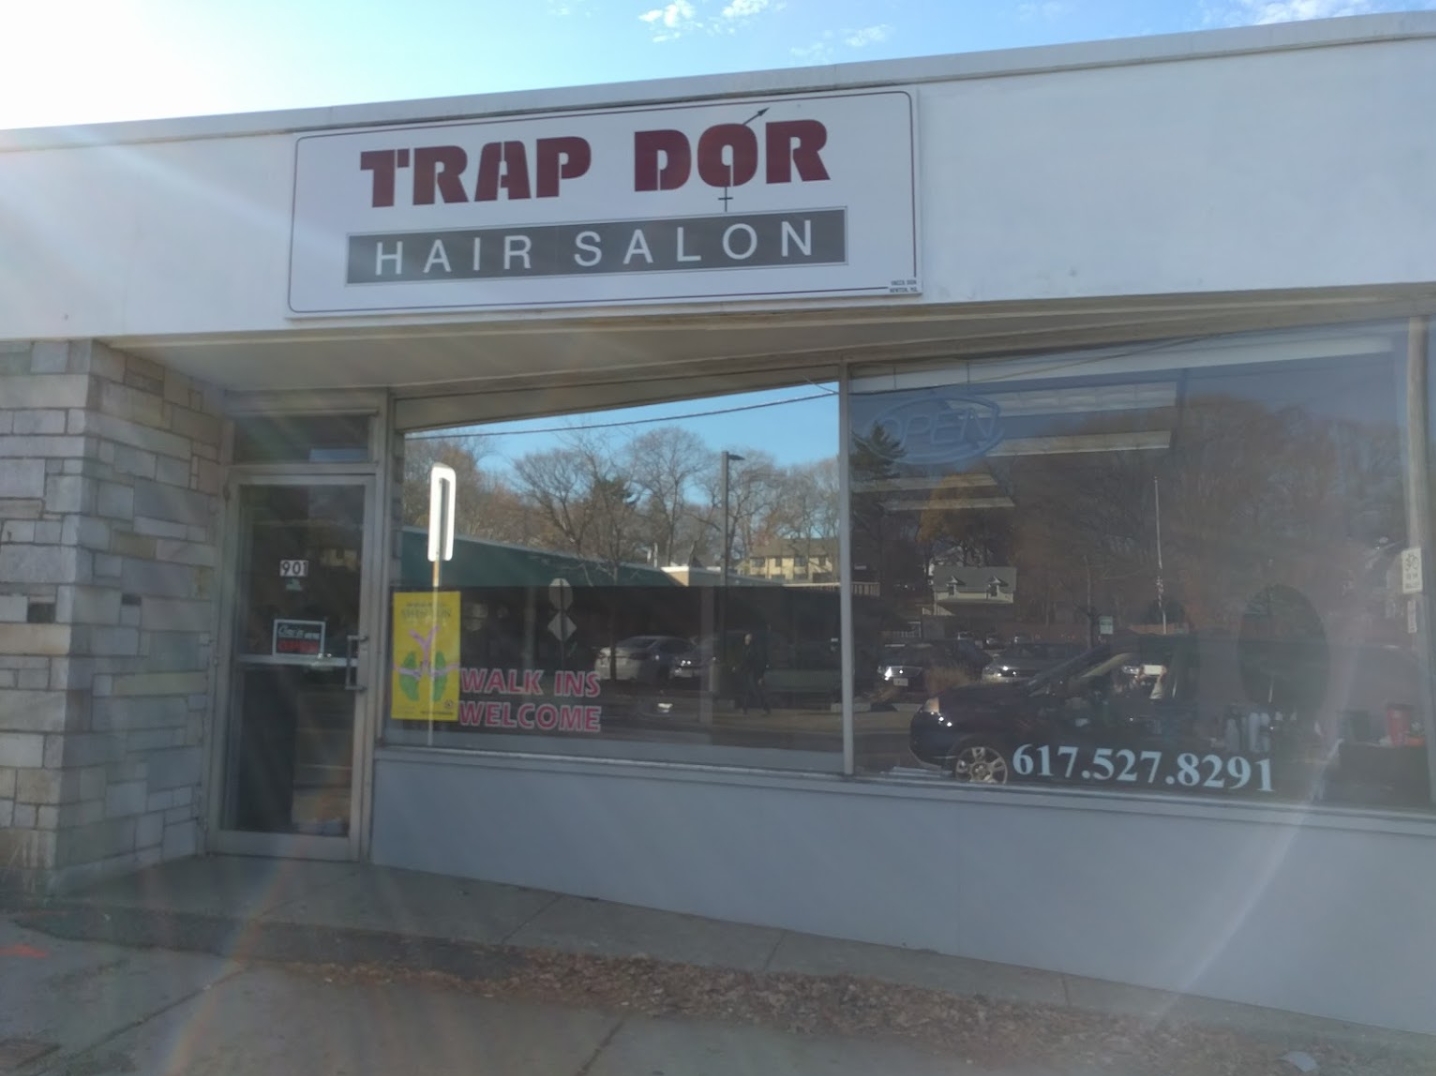 Trap Dor - Hair Salon